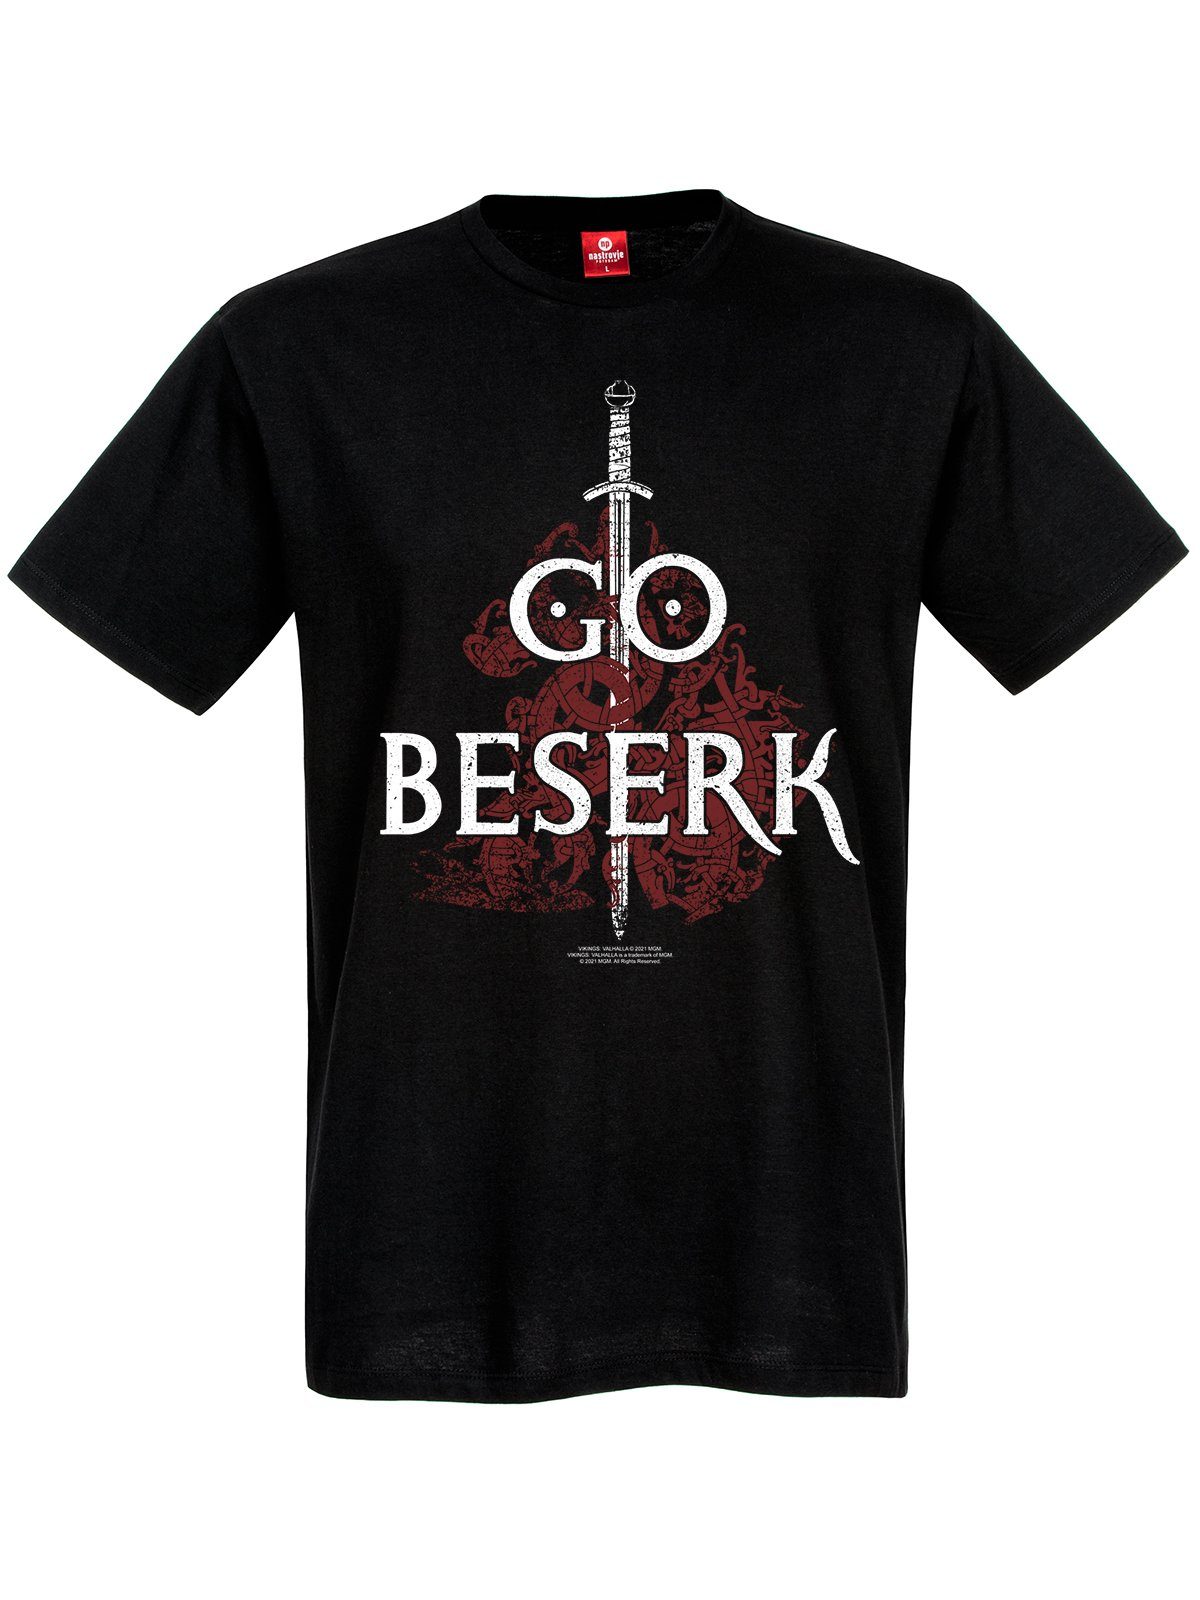 Beserk Go Vikings T-Shirt Valhalla Nastrovje Potsdam